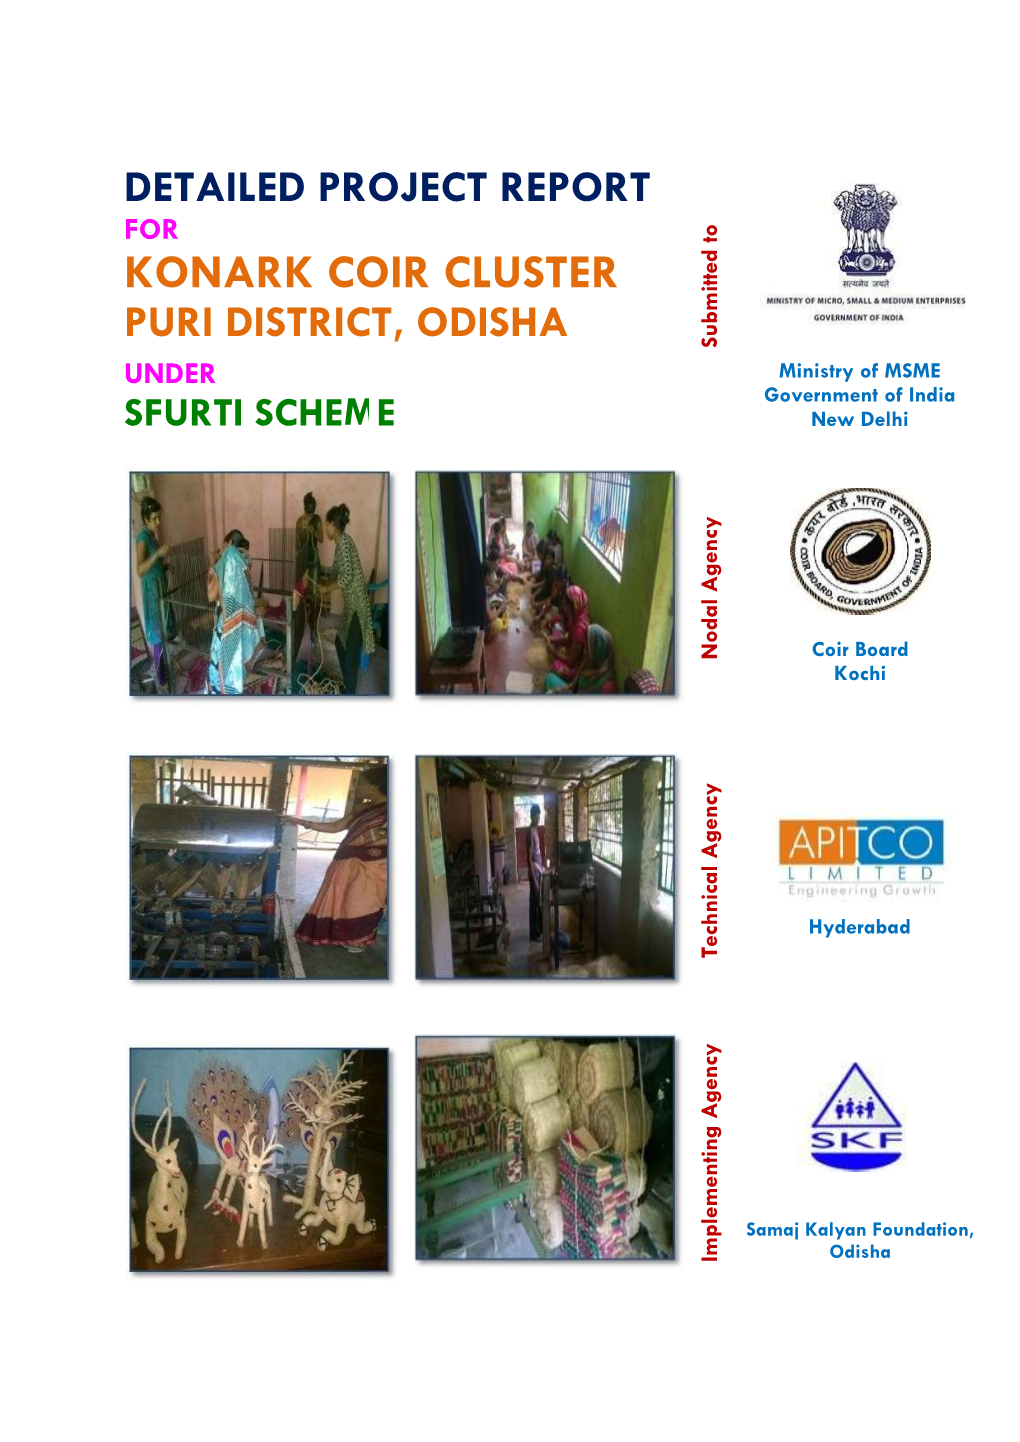 Detailed Project Report for Konark Coir Cluster